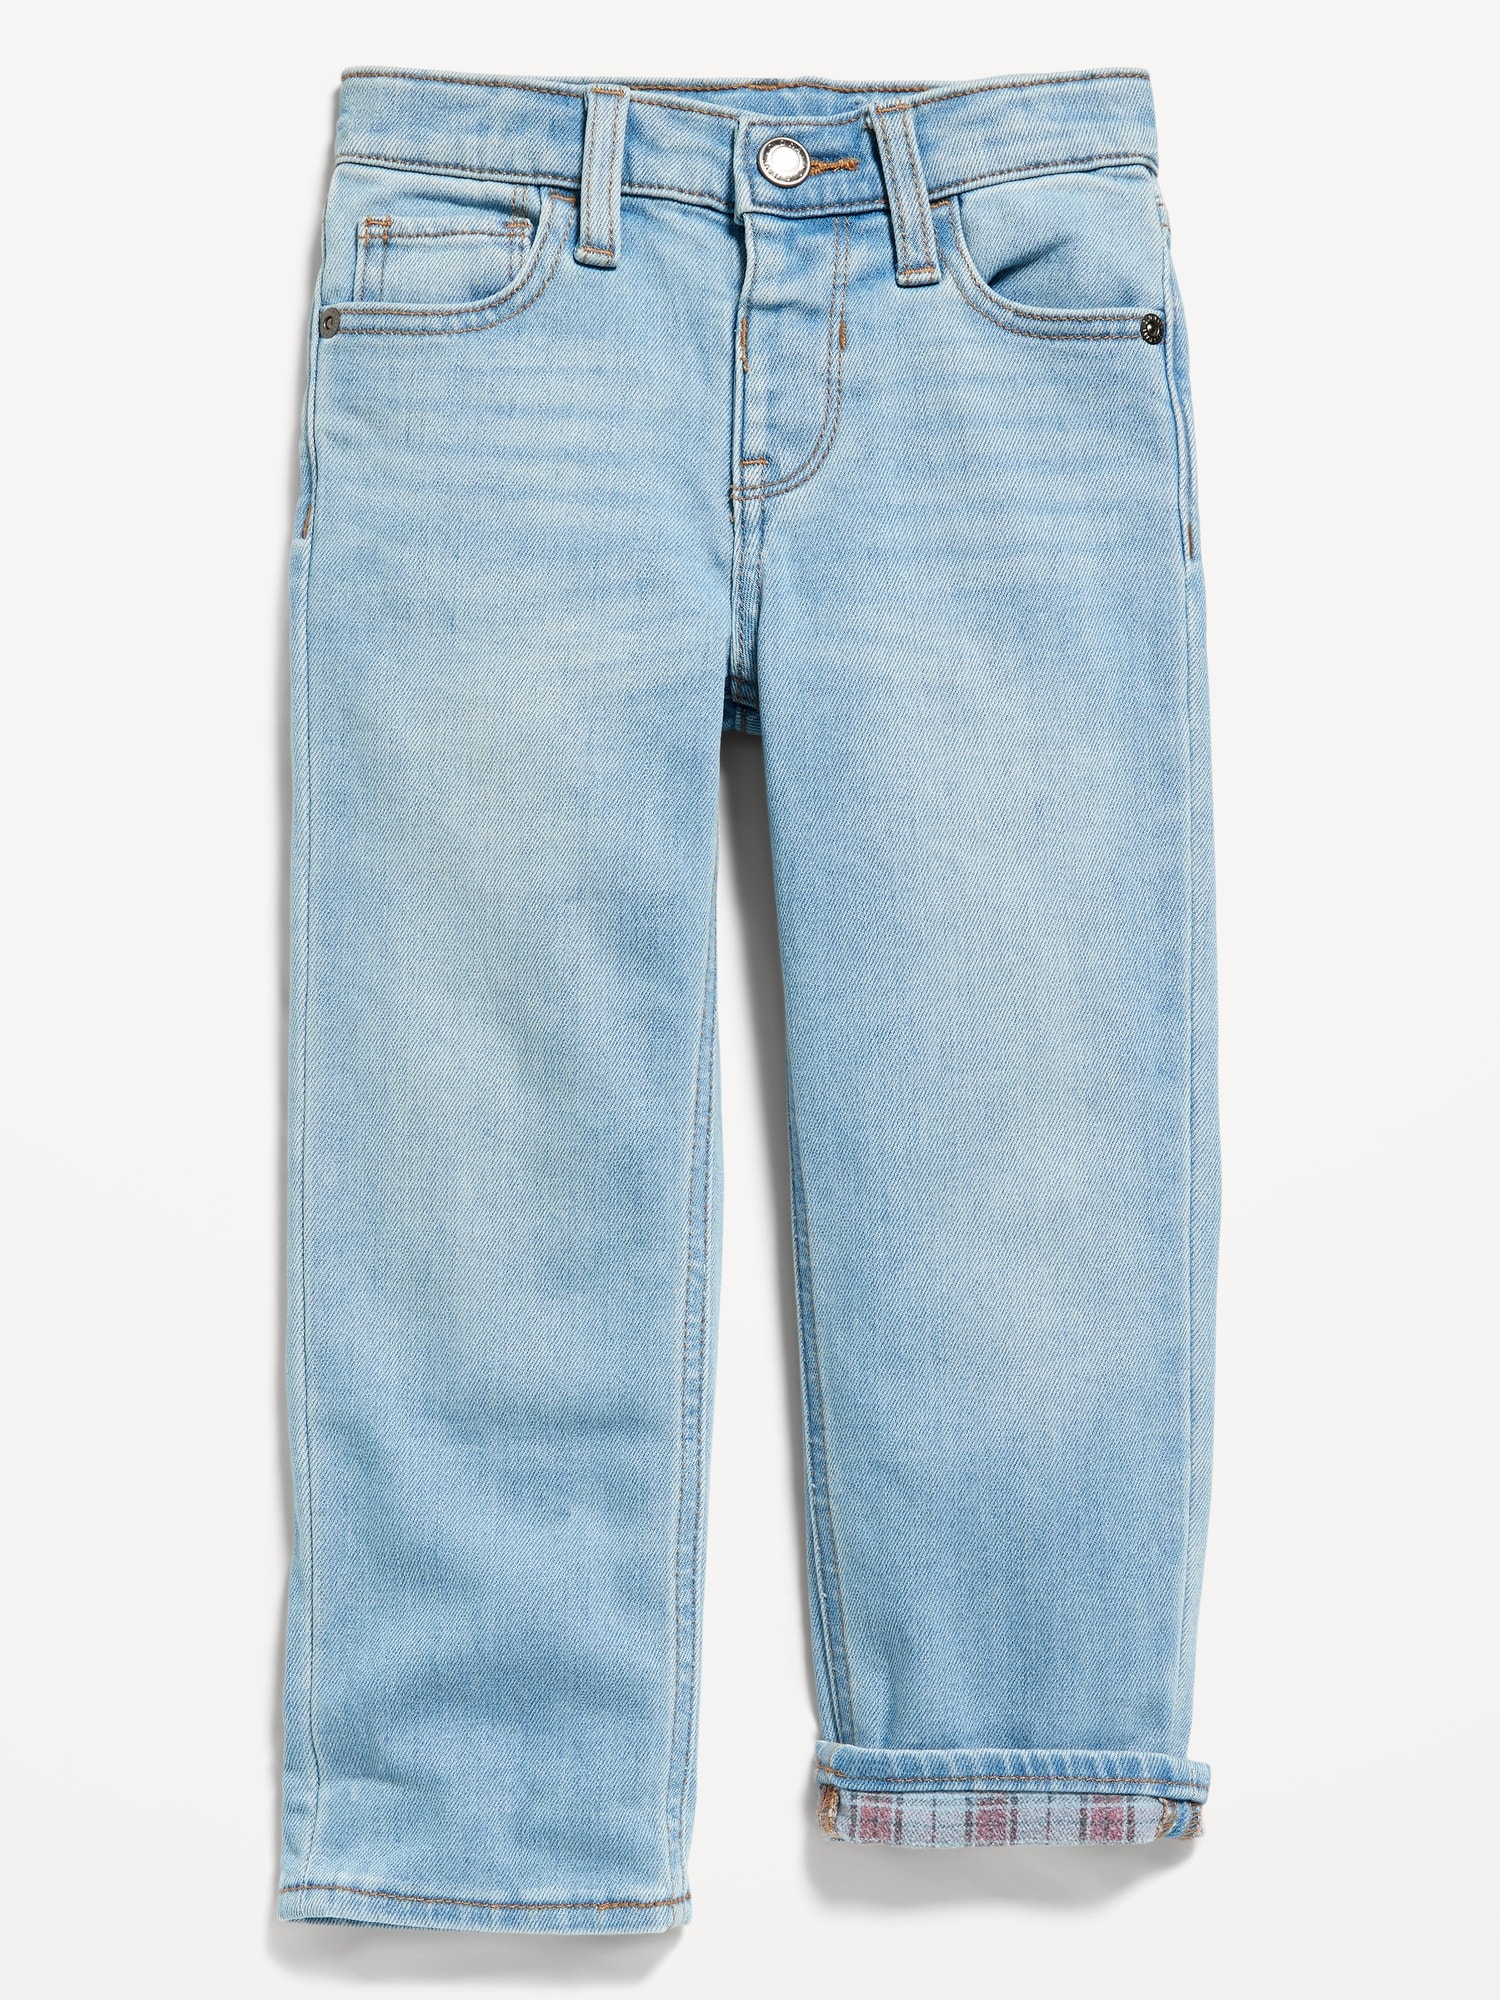 Deal solid blue jeans - G3-WJJ0713 | G3fashion.com